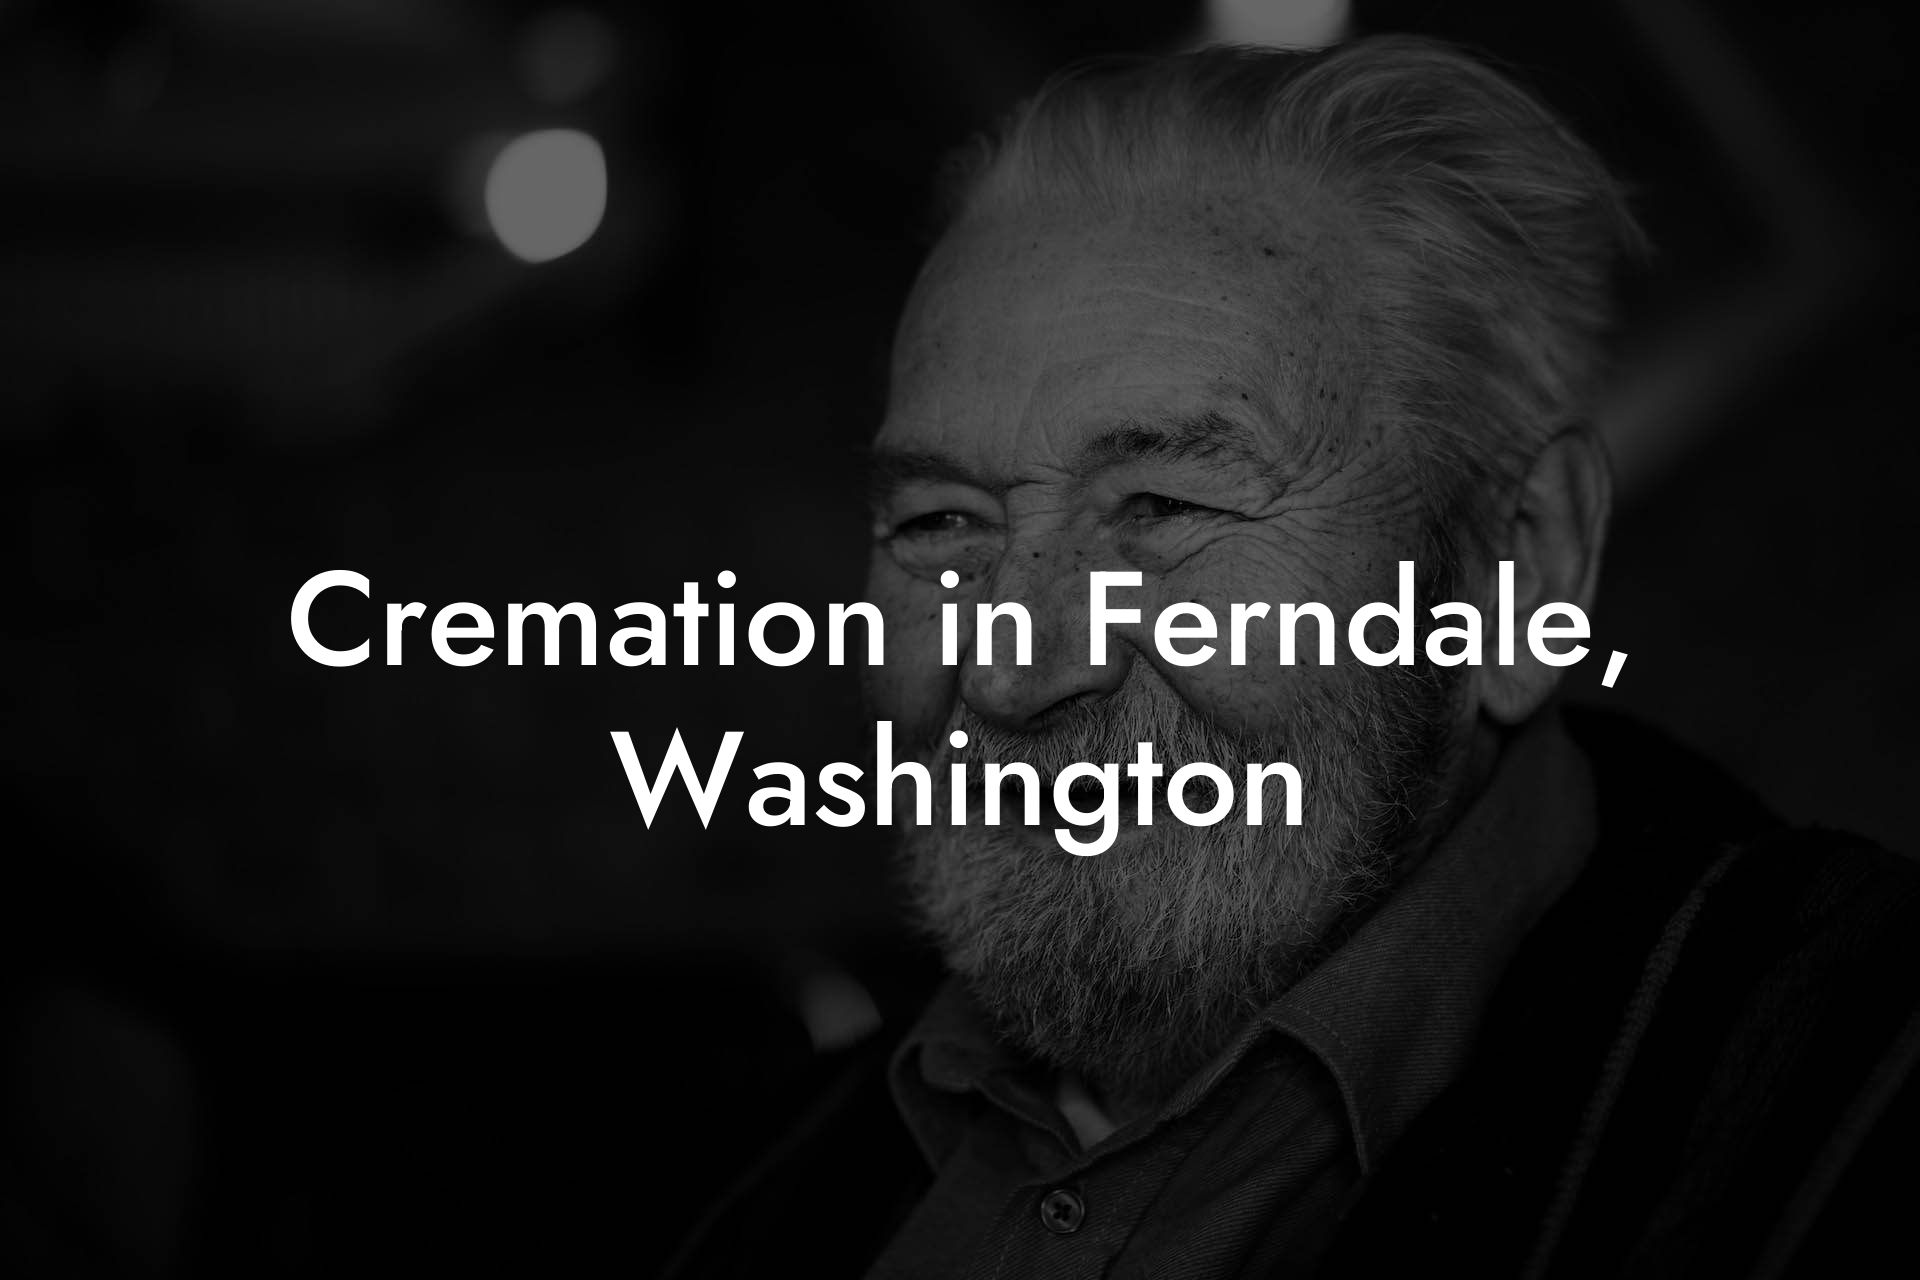 Cremation in Ferndale, Washington